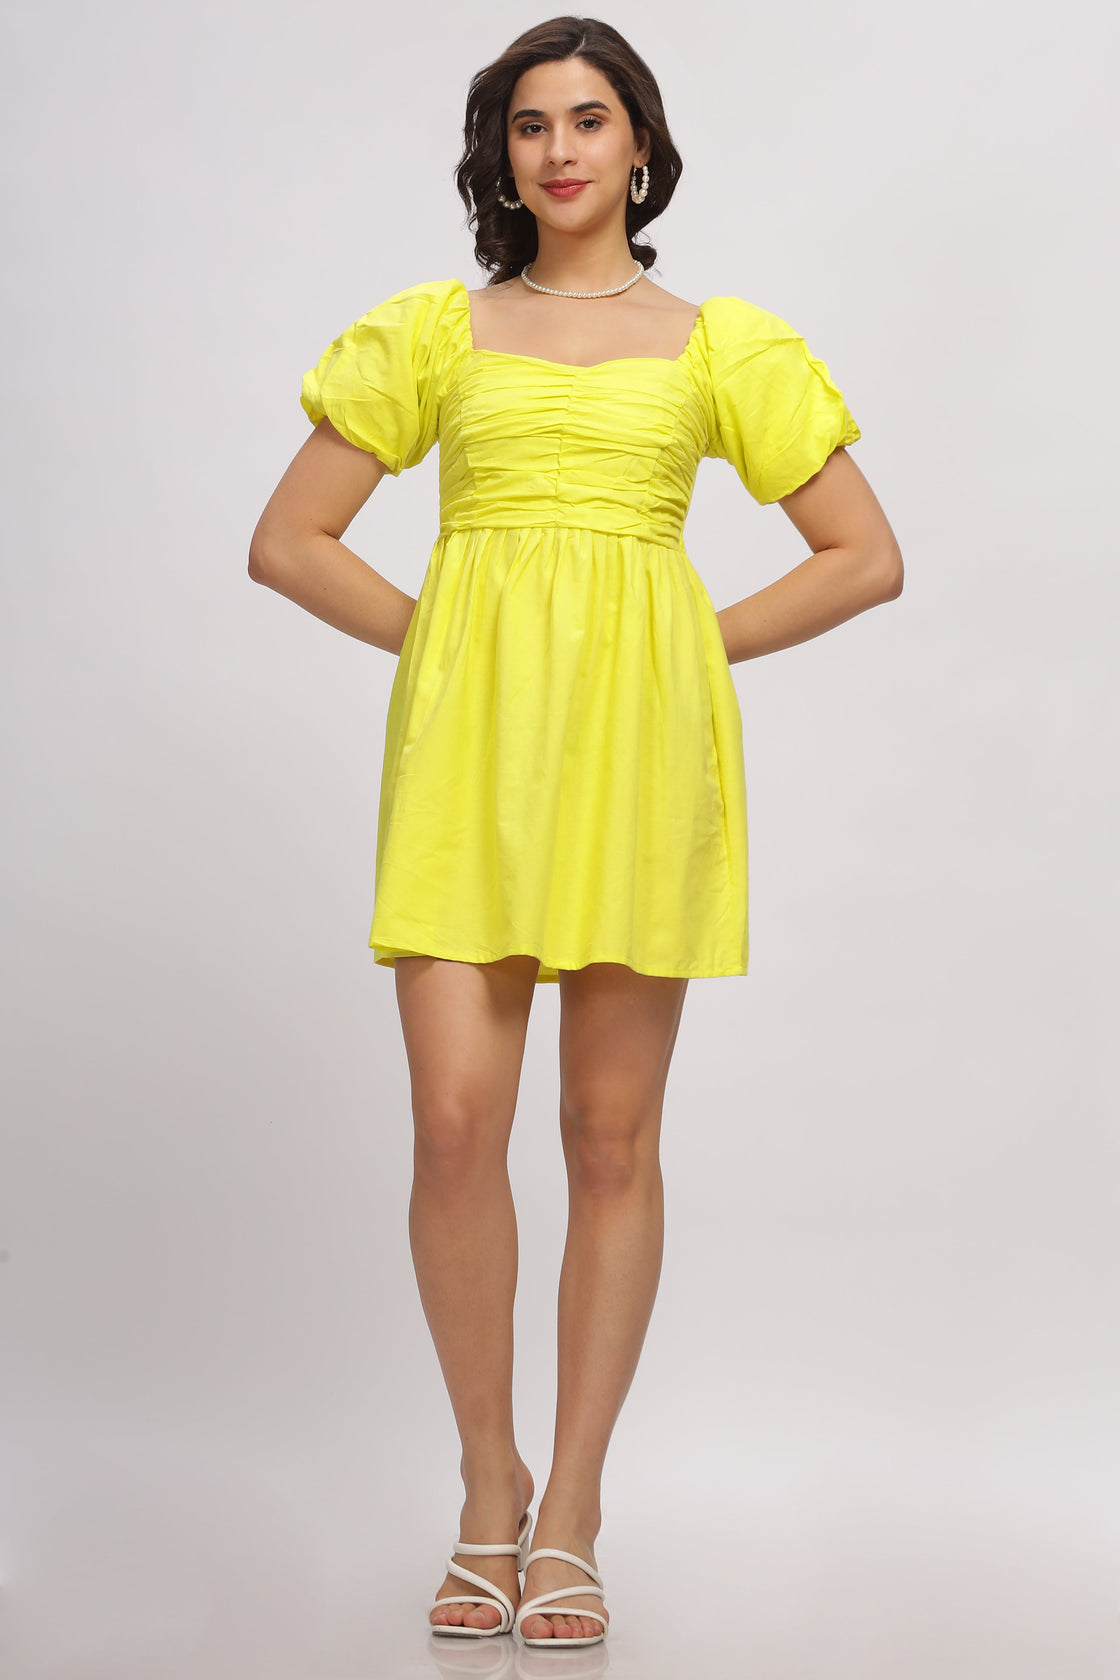 Carson Neon Yellow Mini Dress